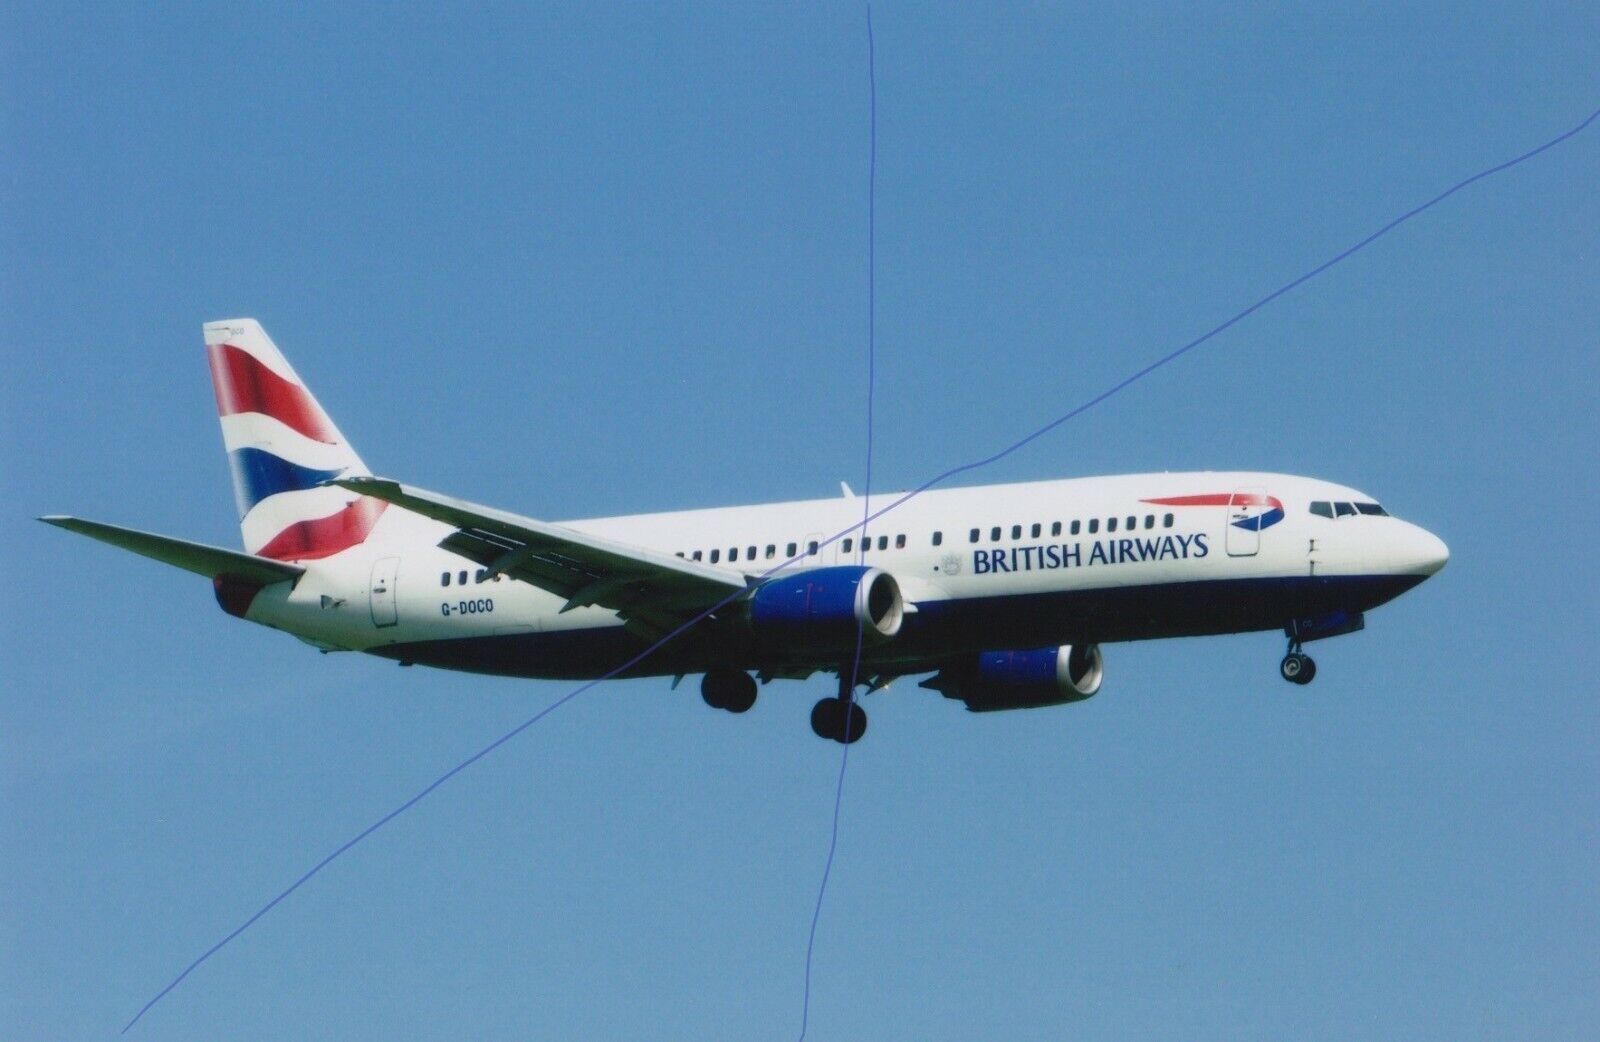 CIVIL AIRCRAFT PLANE PHOTO BRITISH AIRWAYS PHOTOGRAPH G-DOCO BOEING 737 PICTURE.